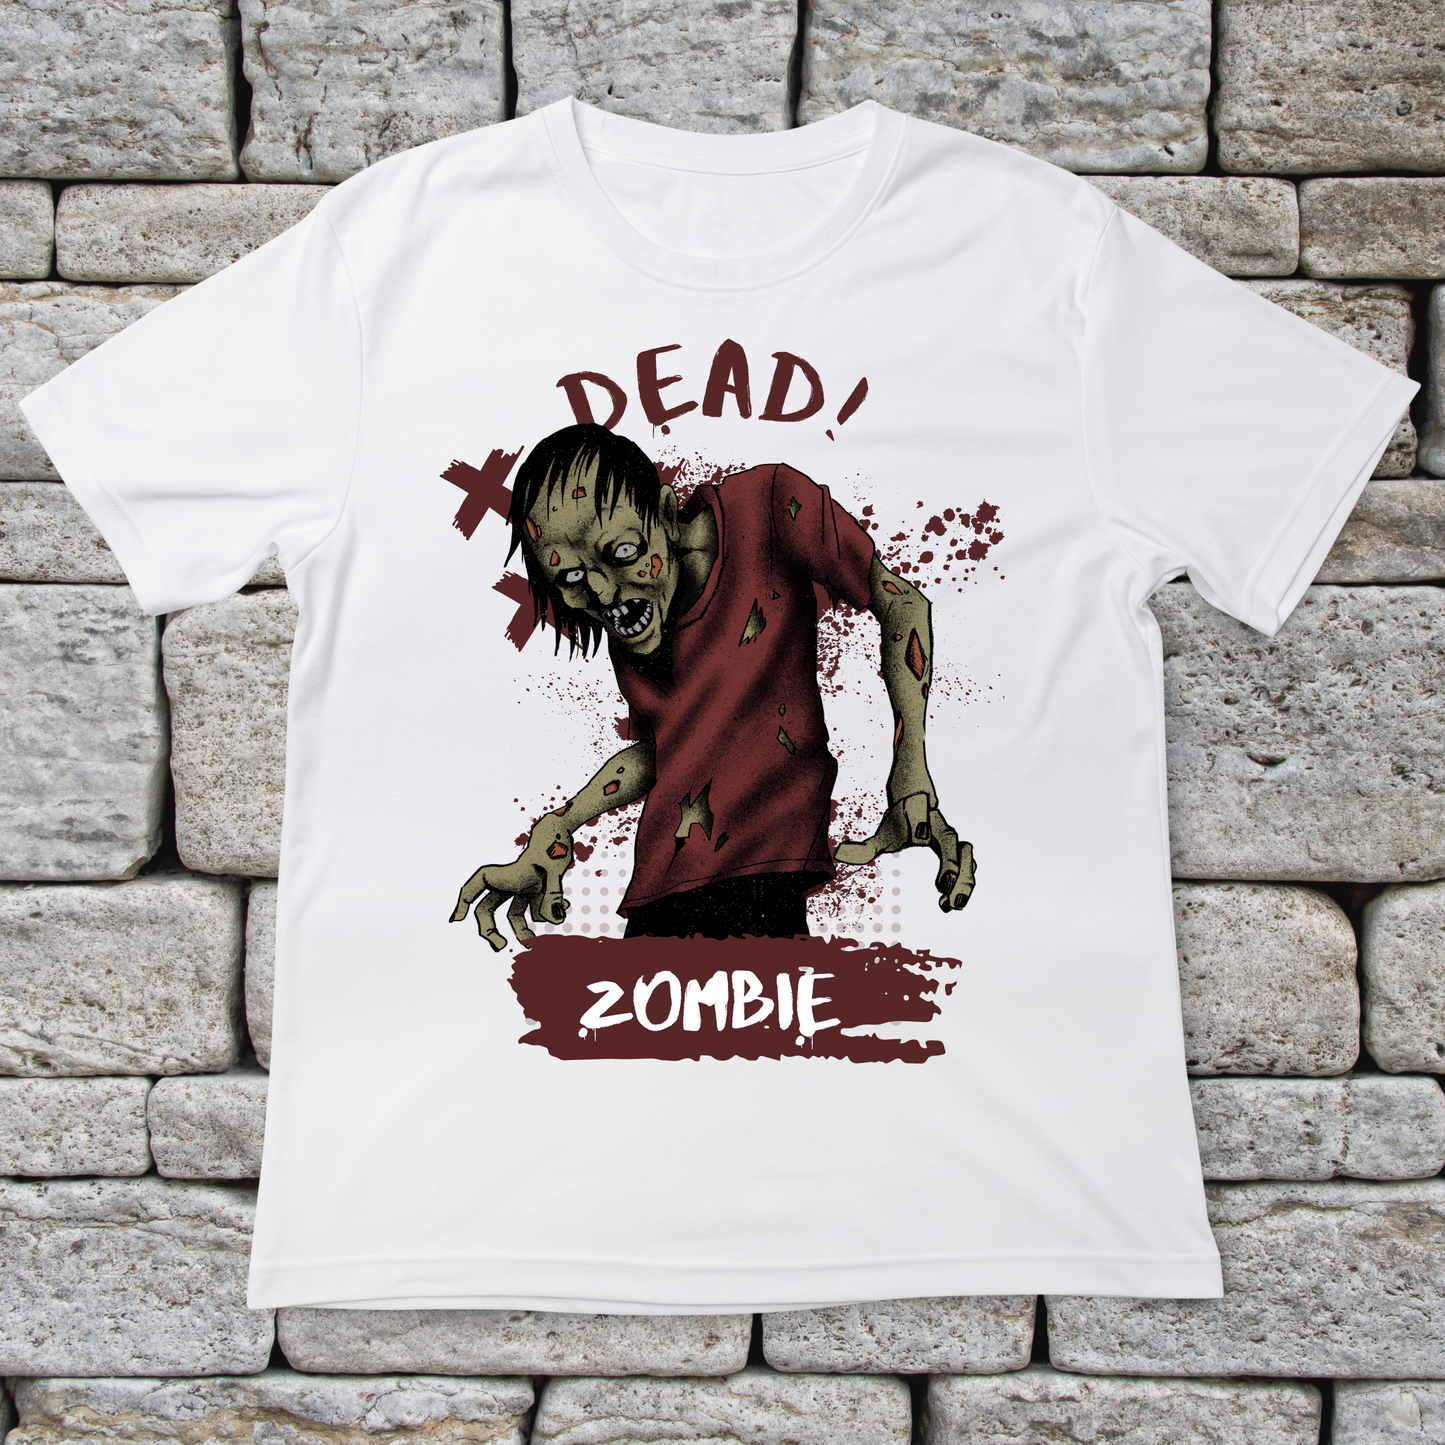 Dead zombie art - halloween shirt - Premium t-shirt from Lees Krazy Teez - Just $21.95! Shop now at Lees Krazy Teez